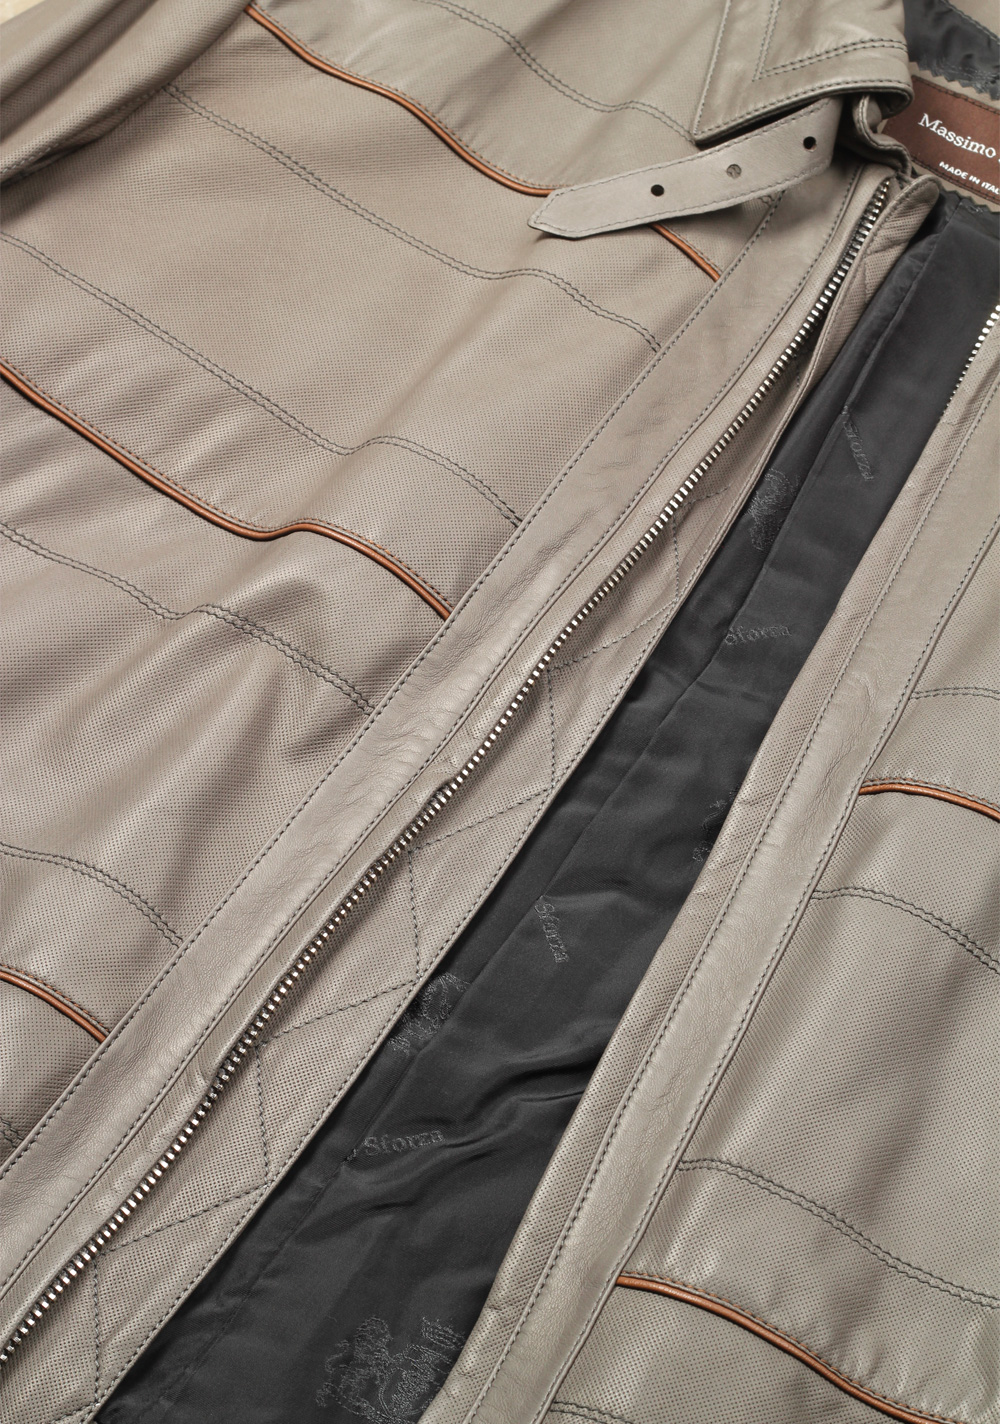 Massimo Sforza Gray Leather Coat Jacket Size 56 / 46R U.S. | Costume Limité